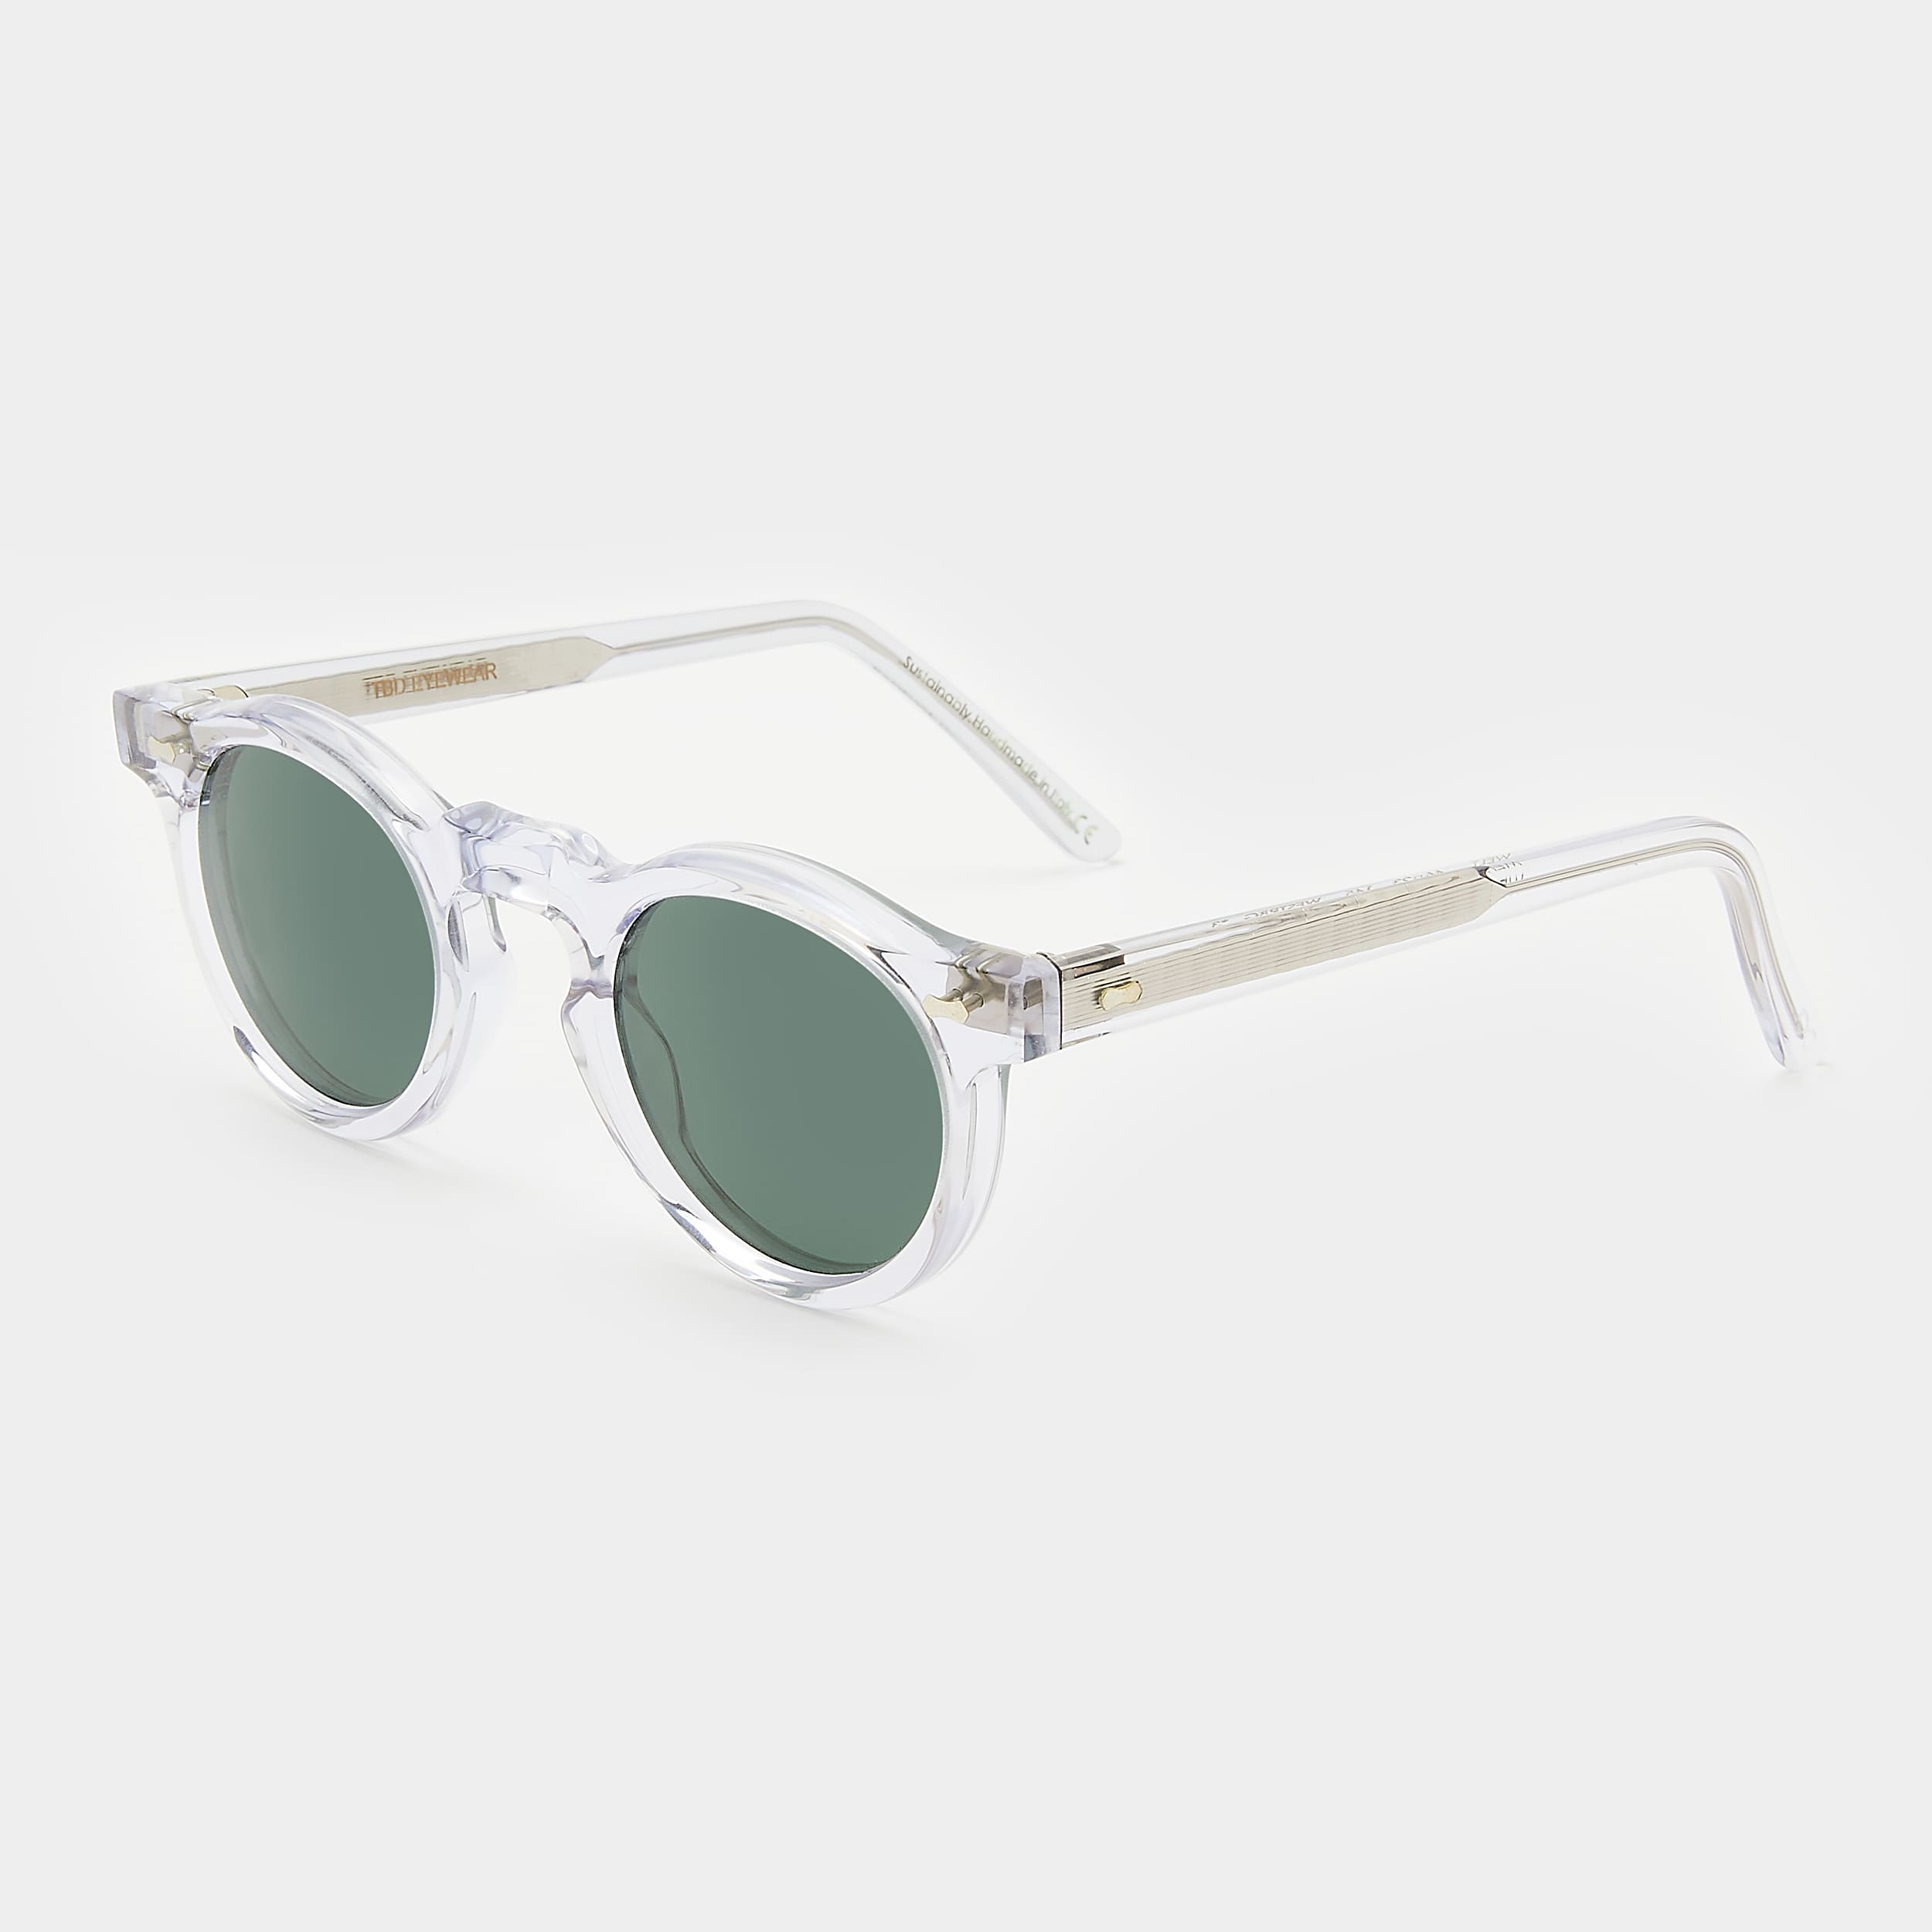 sunglasses-welt-eco-transparent-bottle-green-sustainable-tbd-eyewear-total